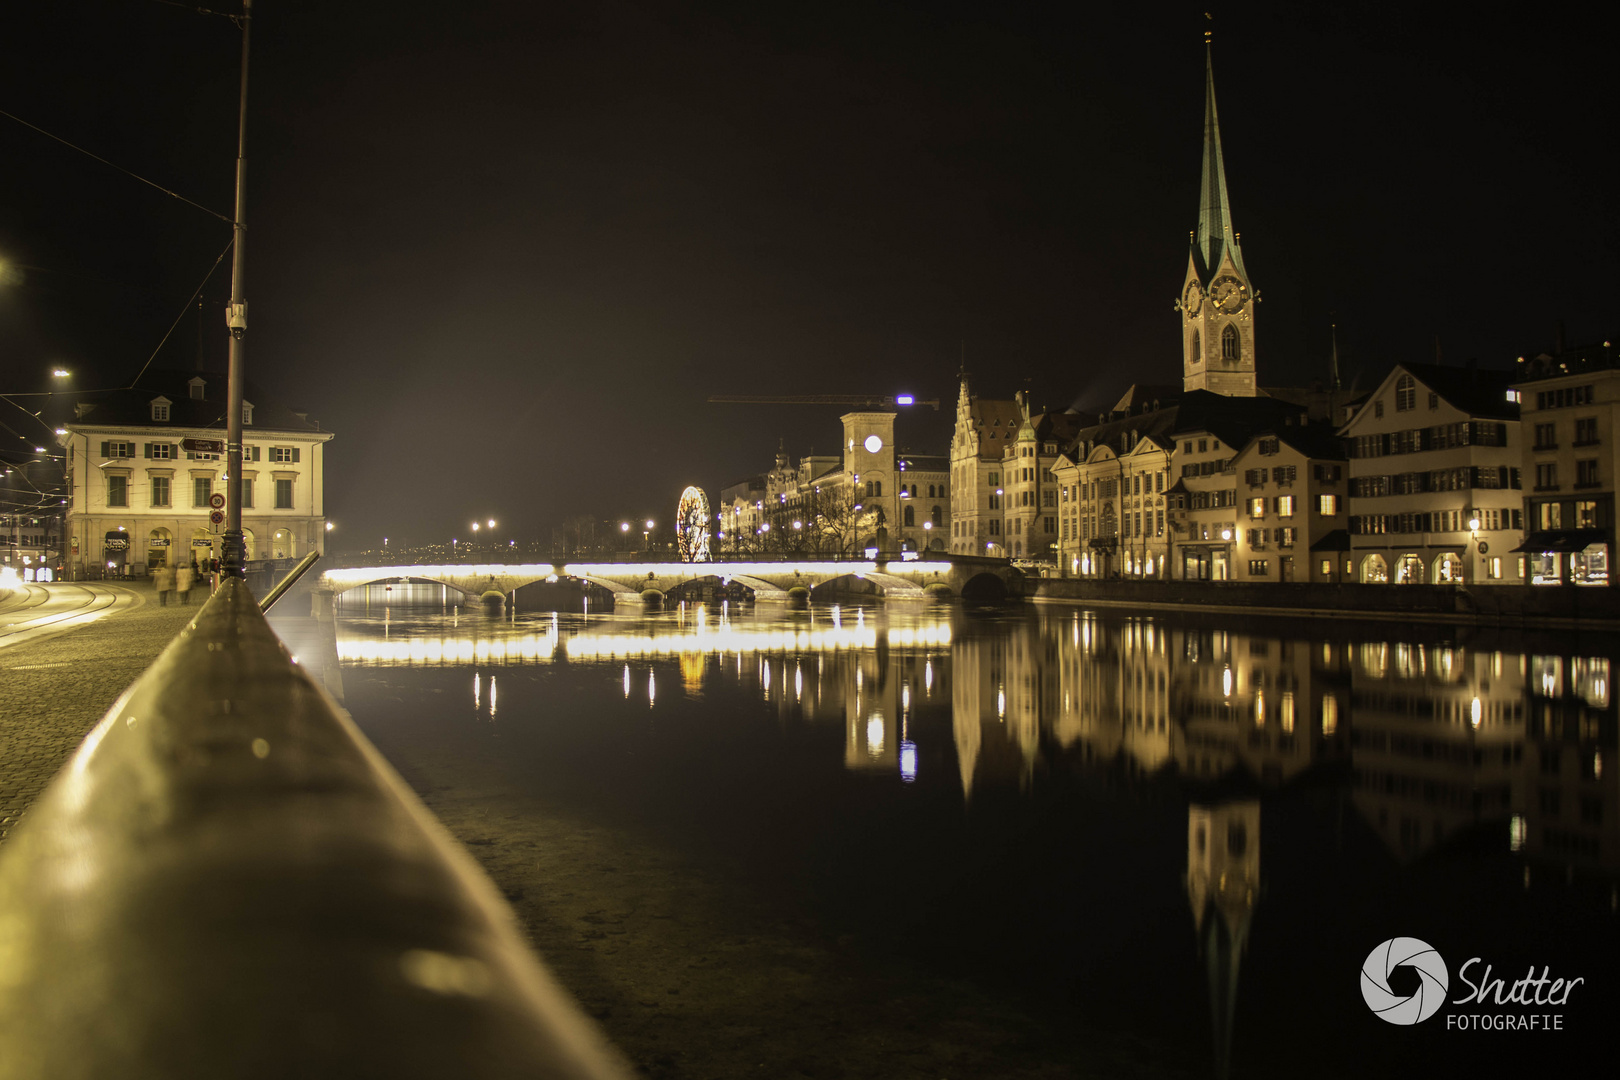 Zürich by night